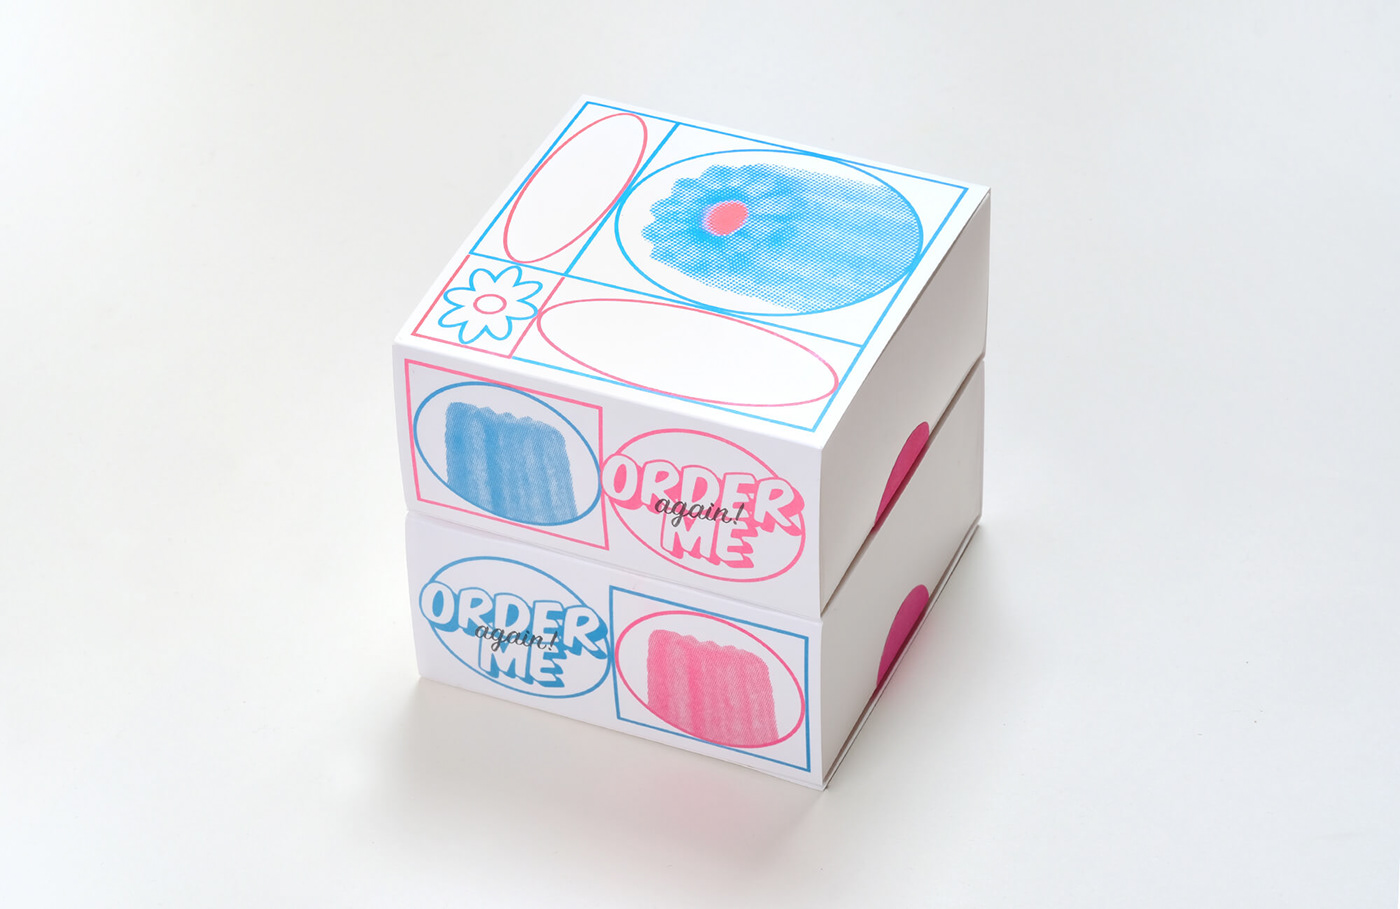 risograph odotoo prints dessert graphic design  packaging design